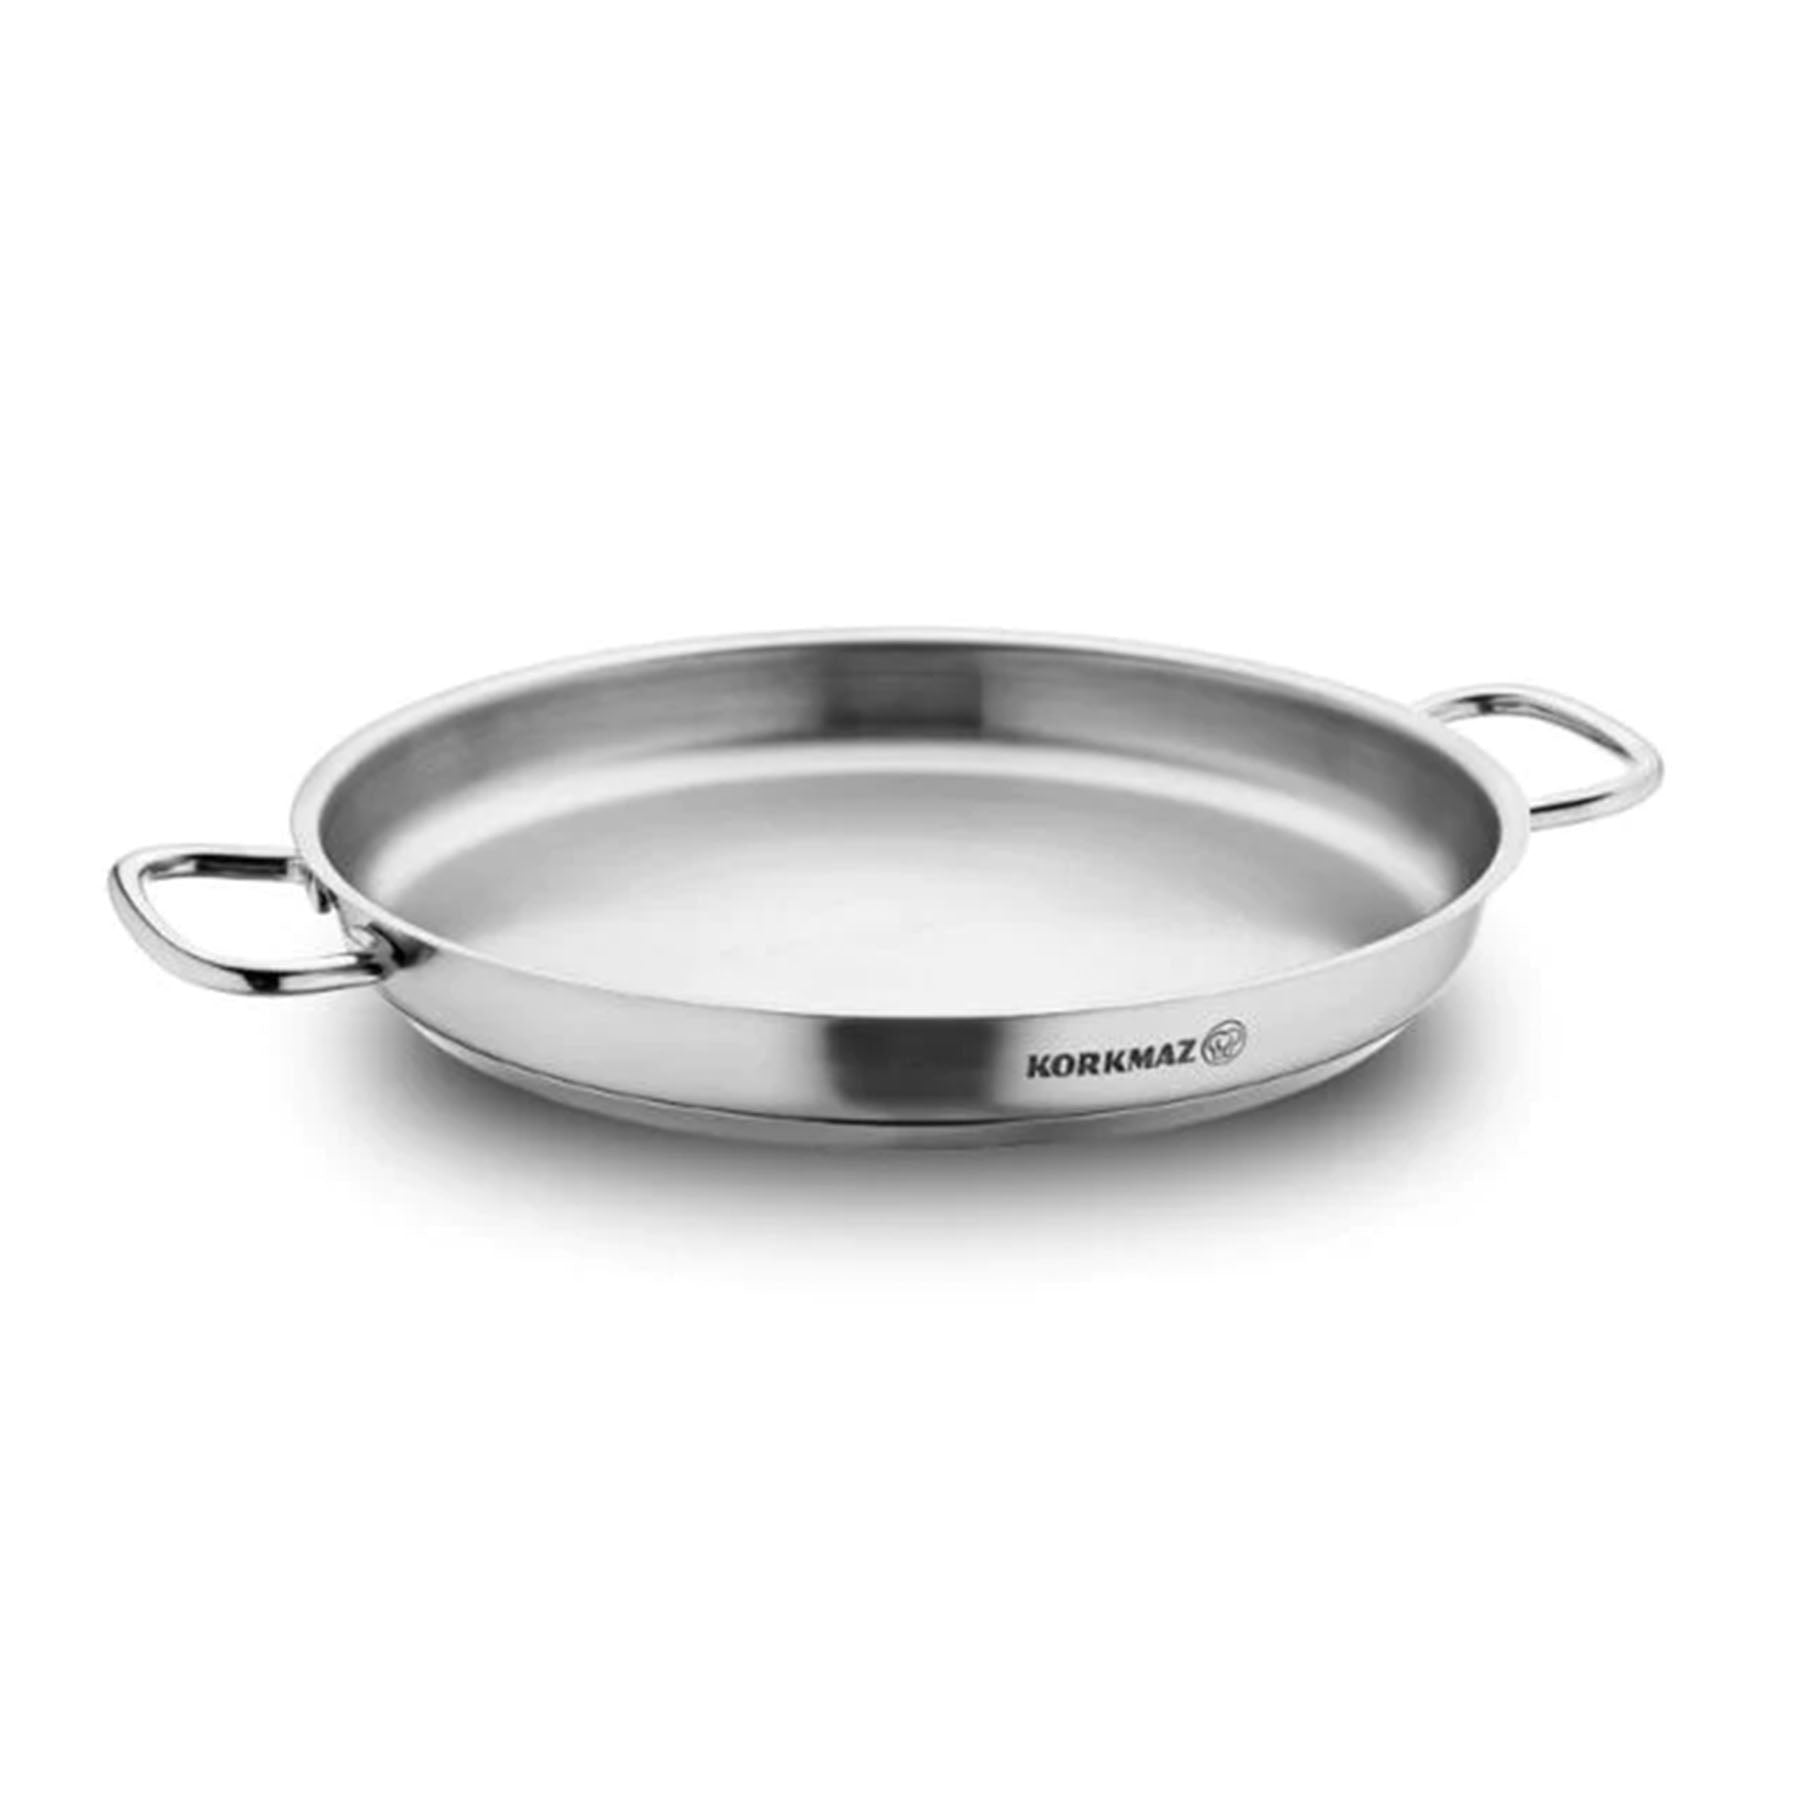 Steel pan with handles